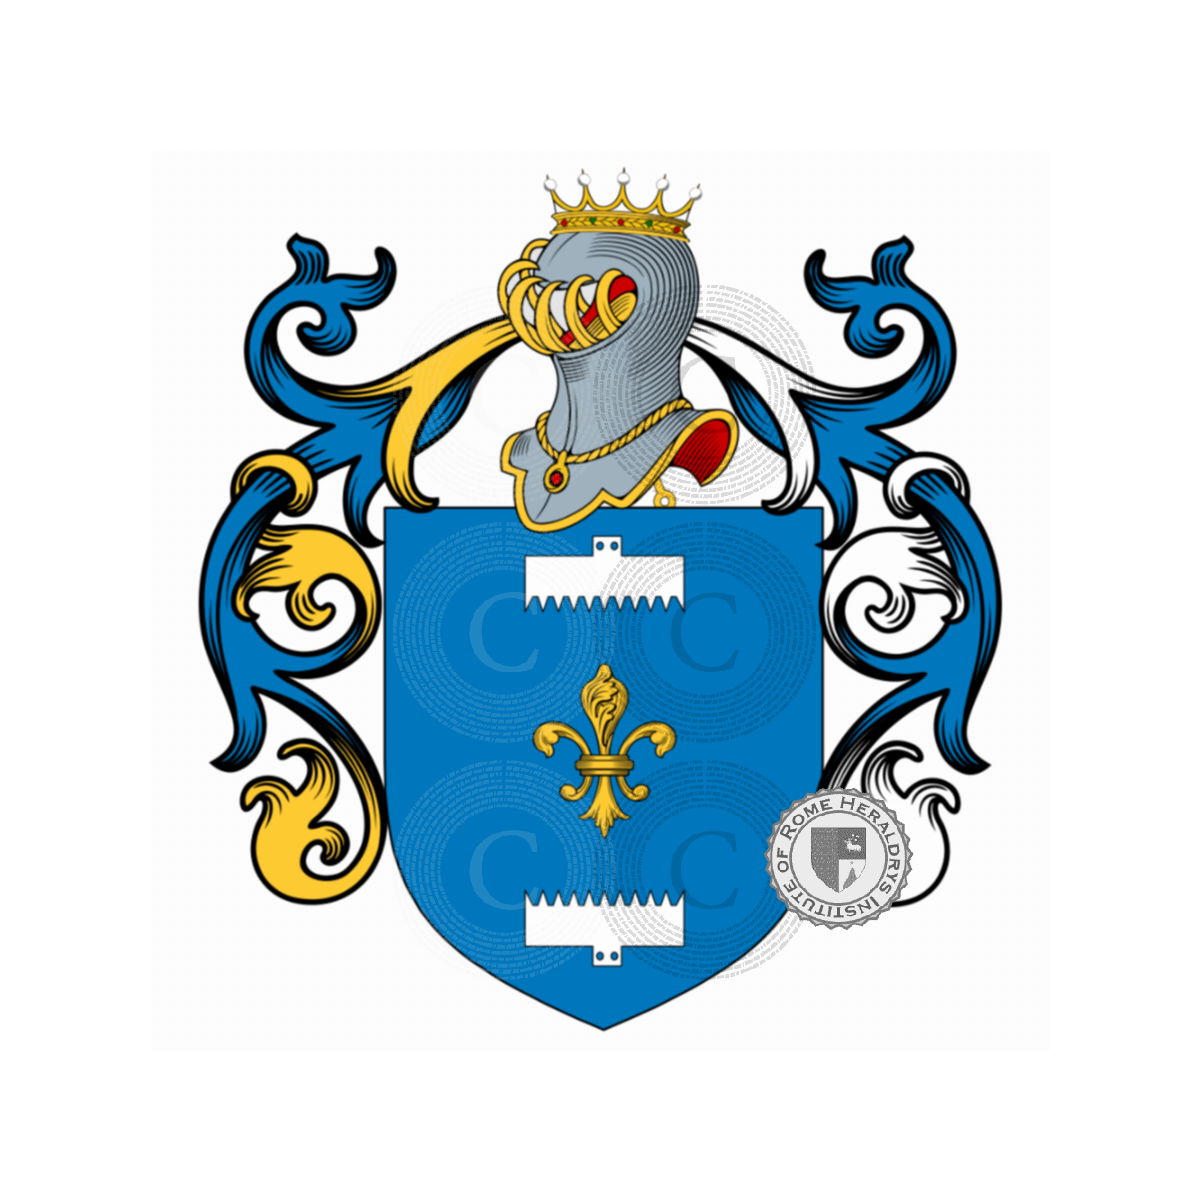 Wappen der FamiliePilati